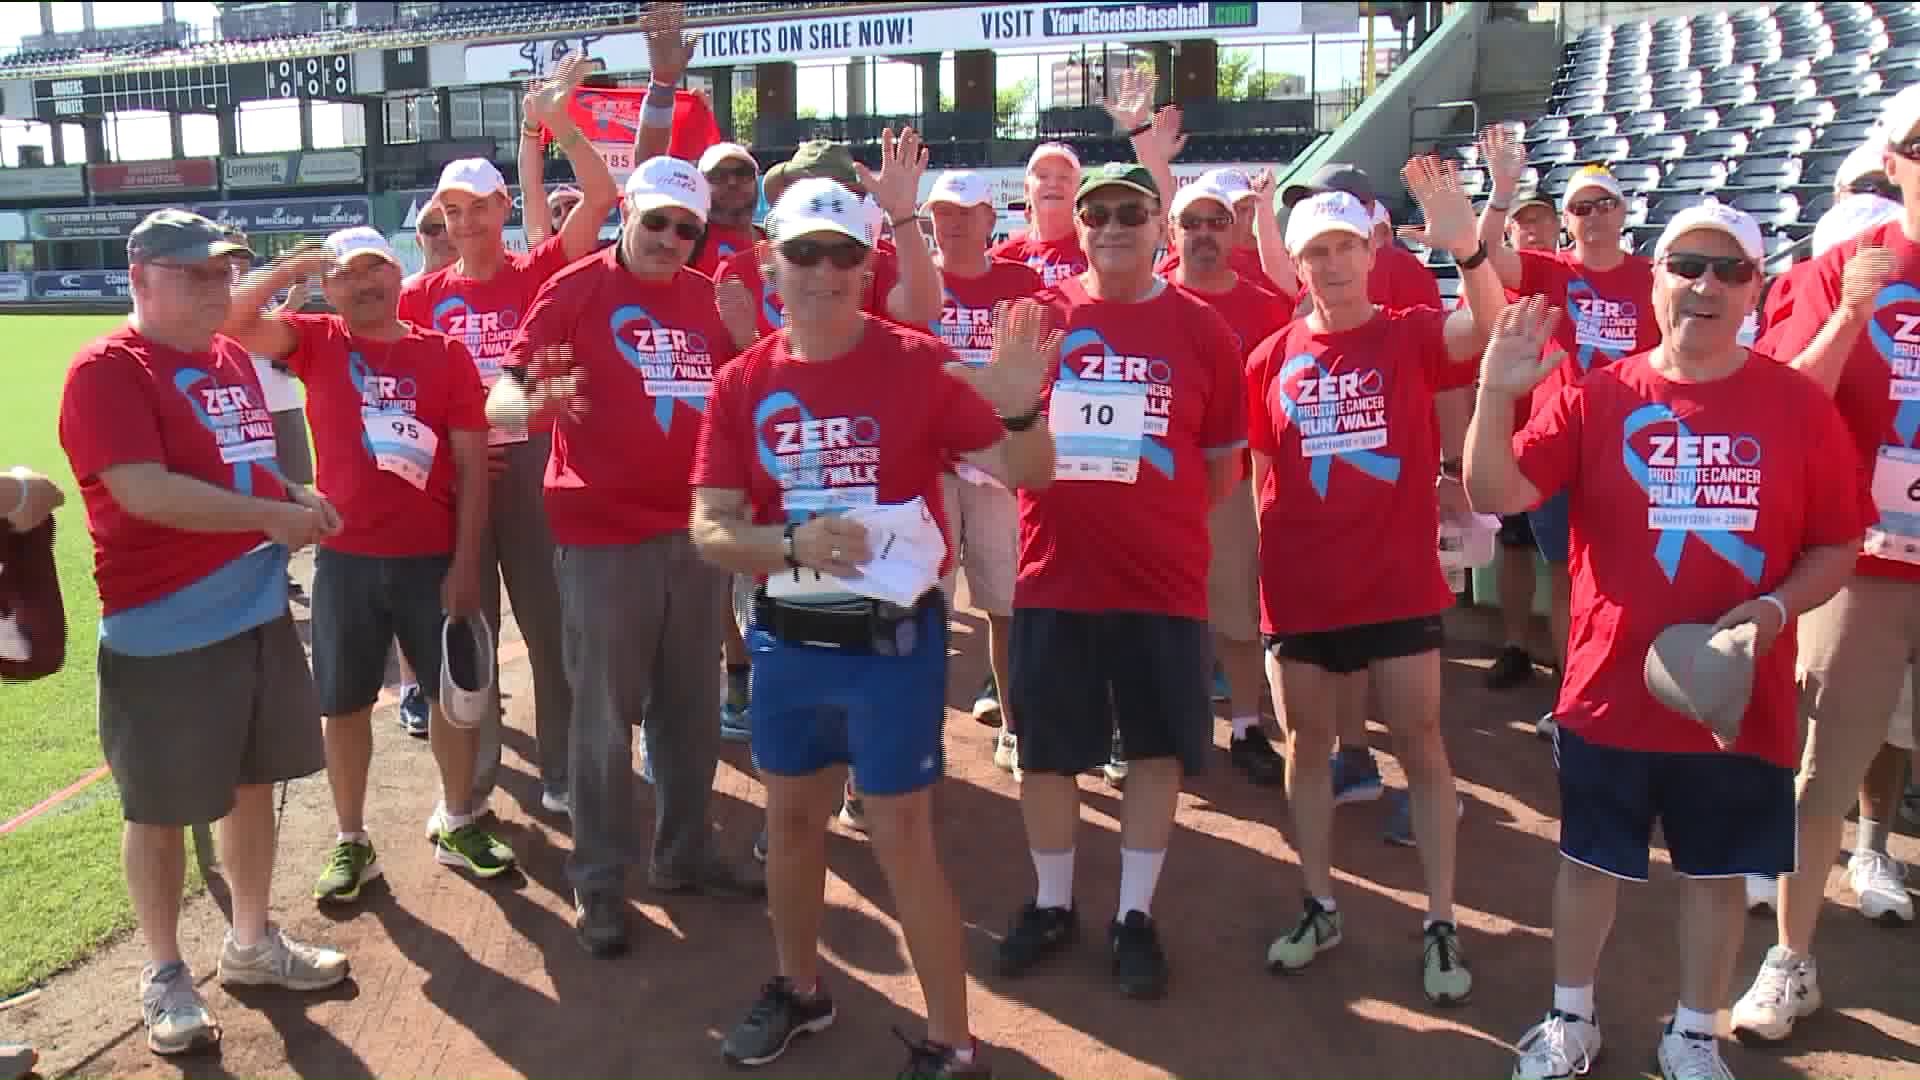 ZERO Prostate Cancer 5k in Hartford raises more than $100,000